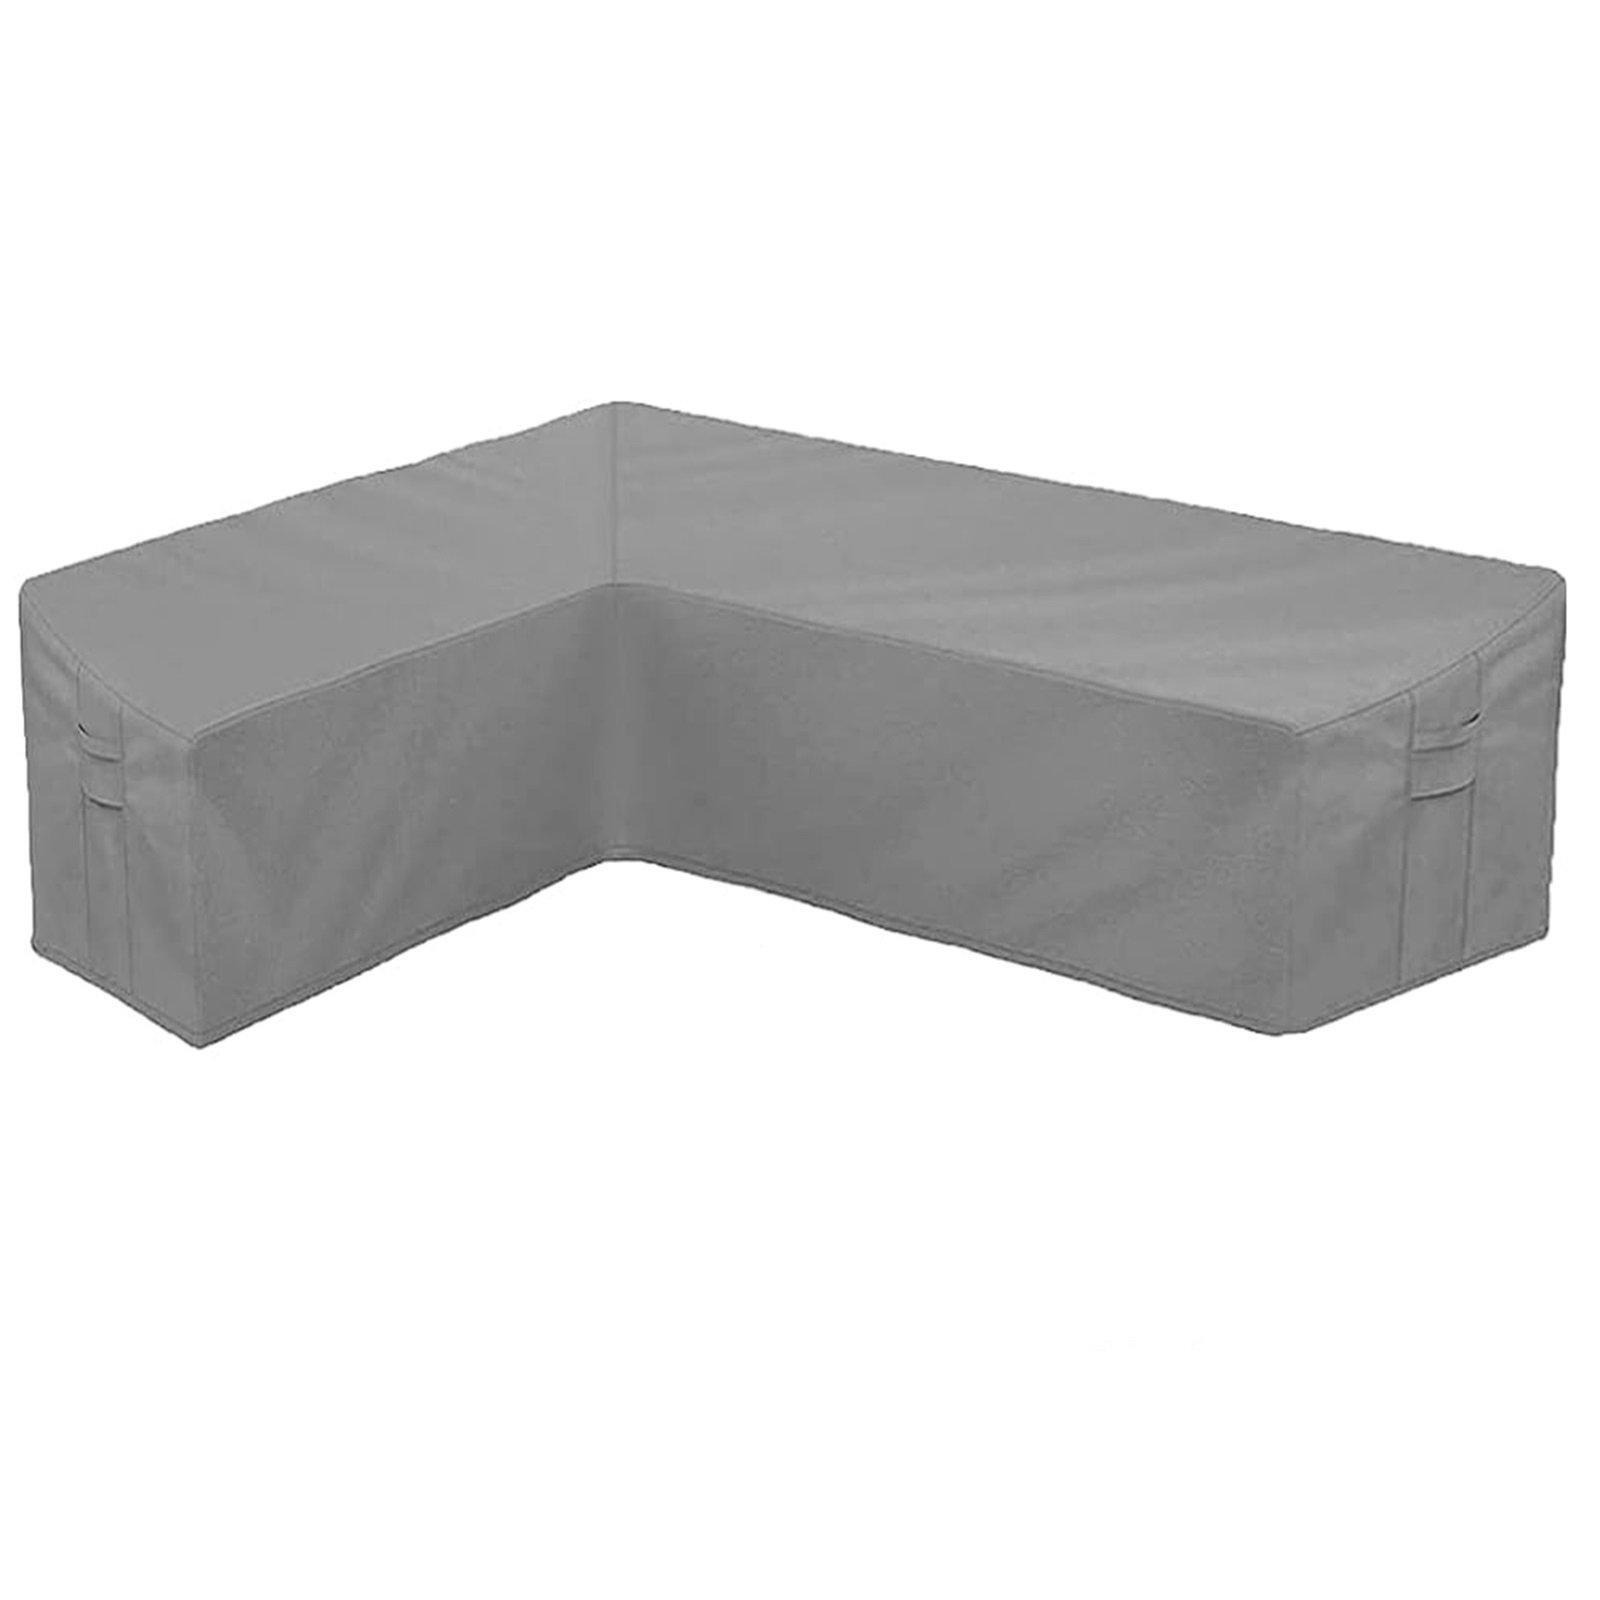 Garden Waterproof L Shape Sofa Cover Protector - image 1